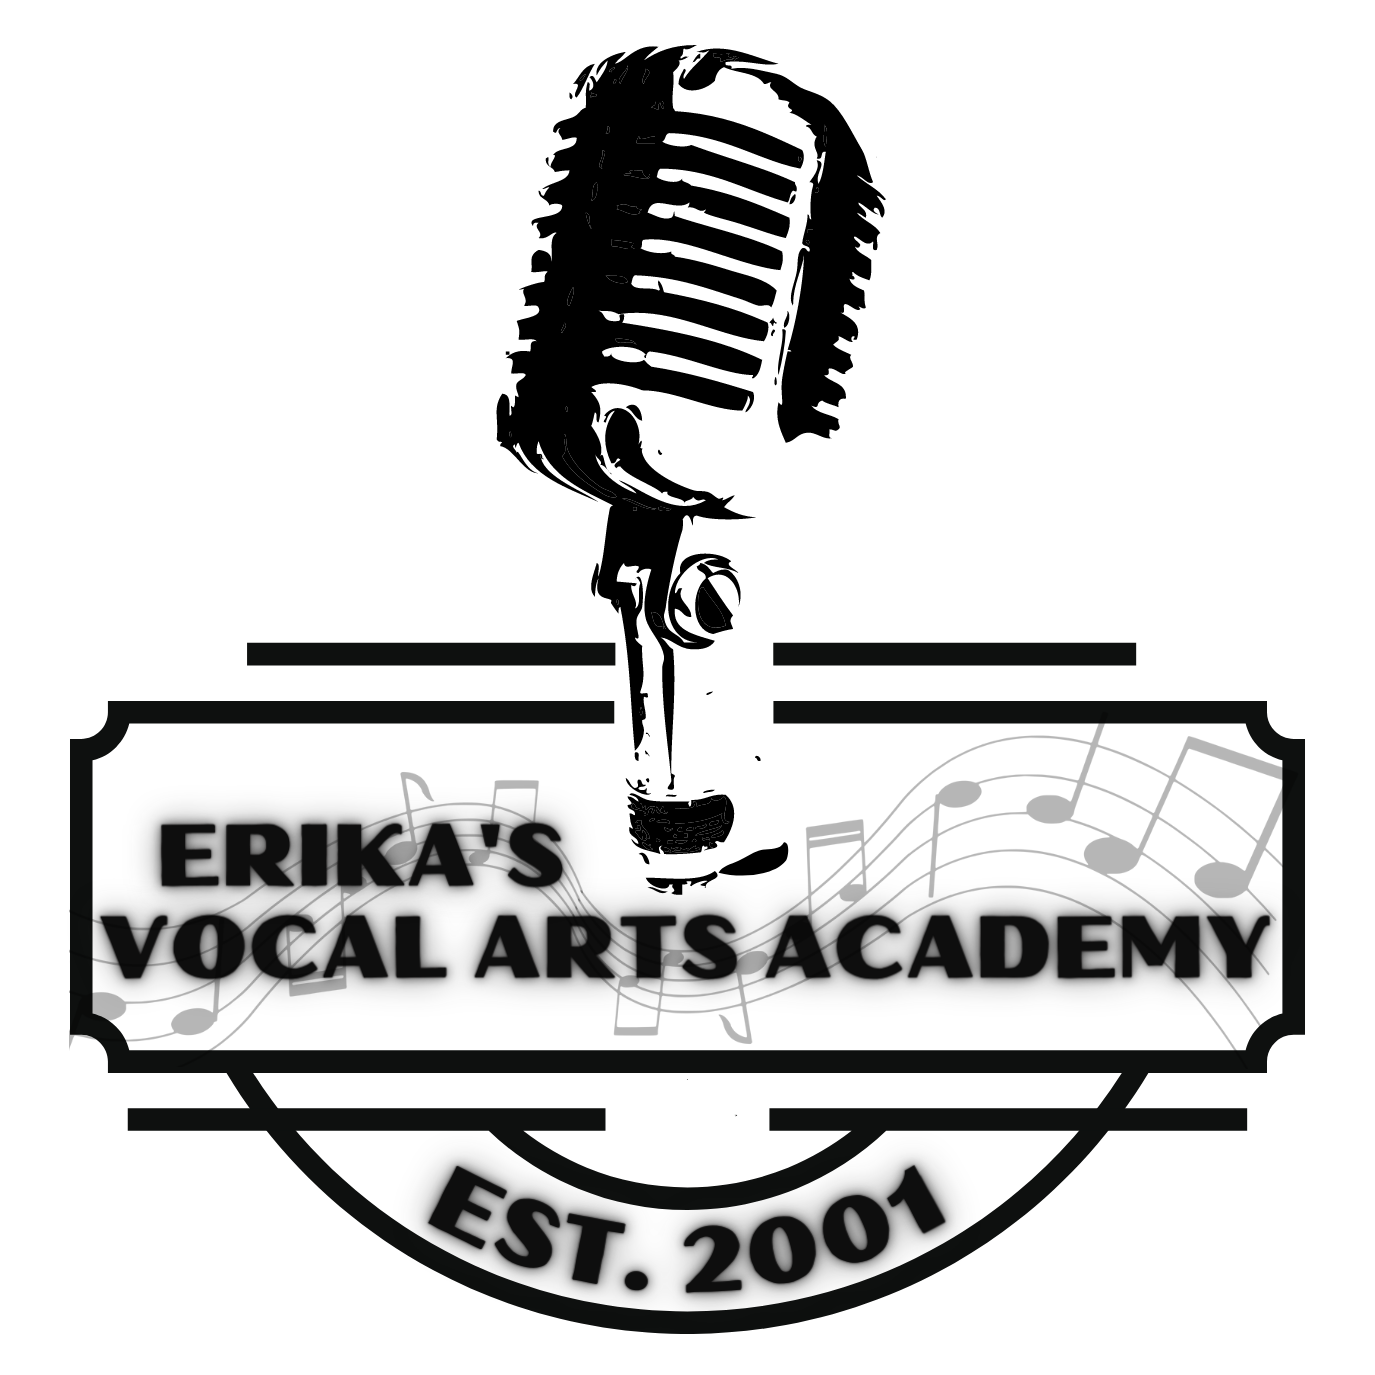 About Erika